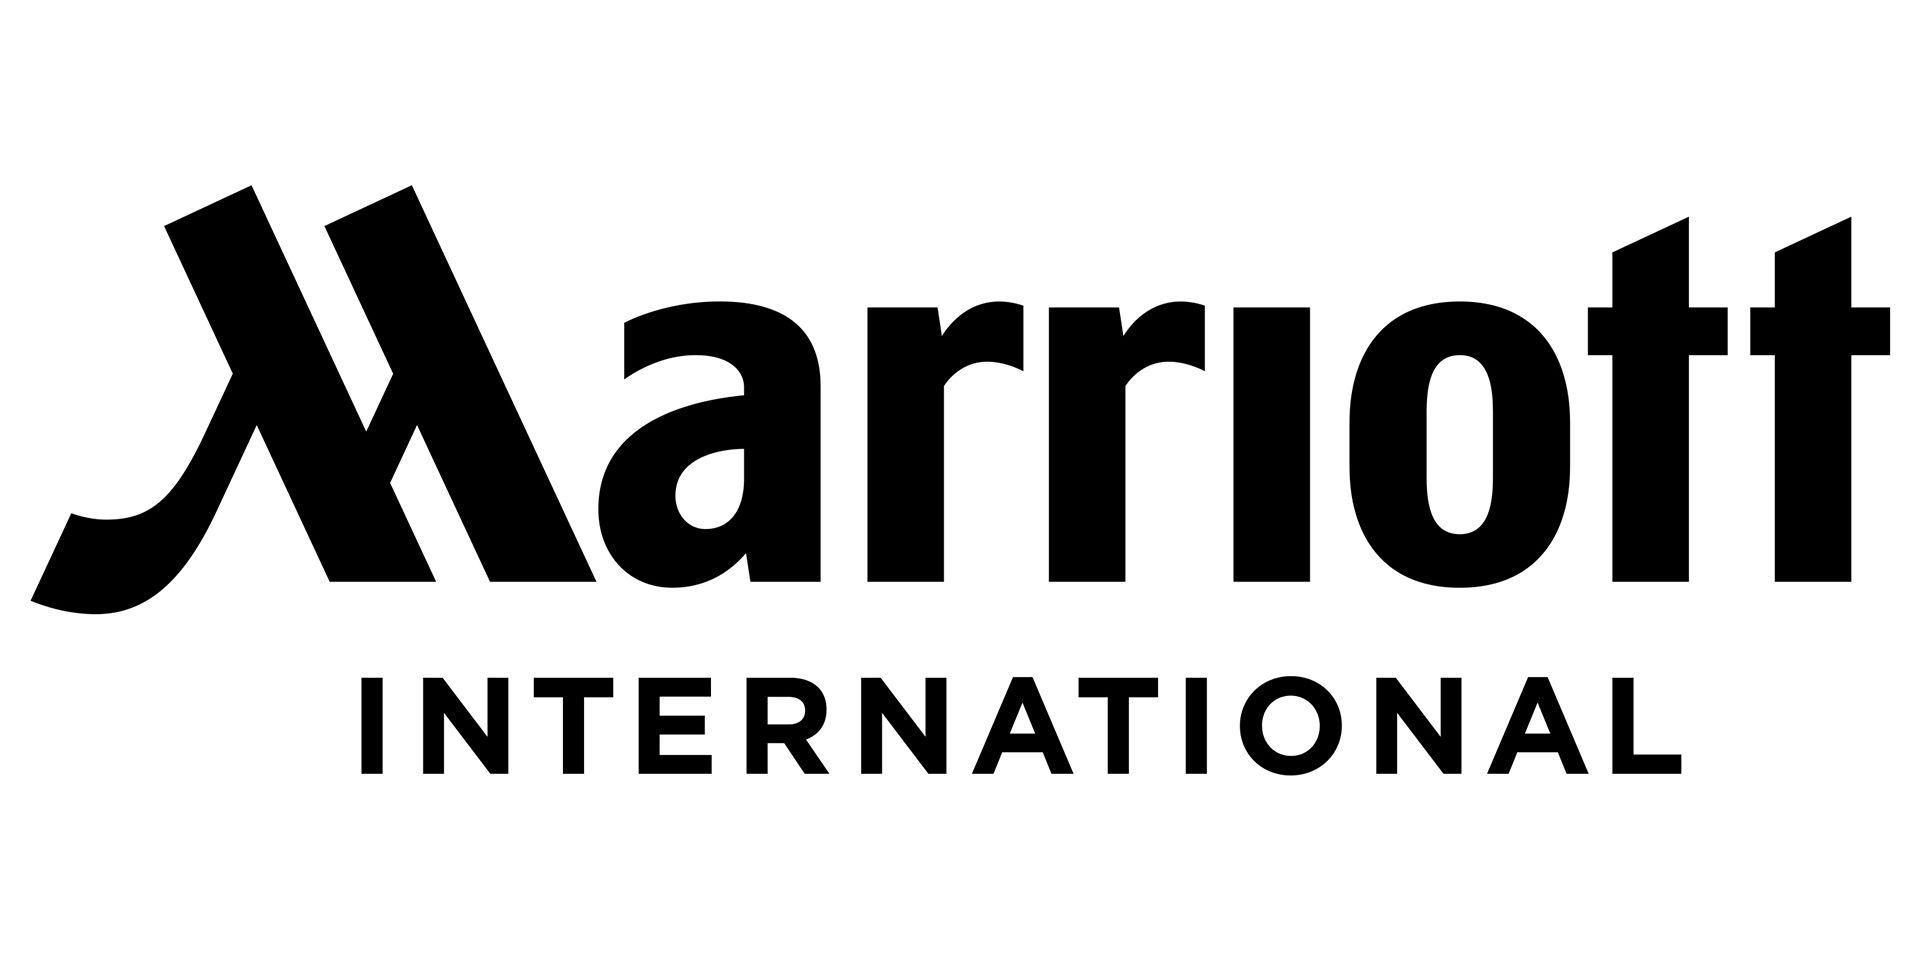 DiversityInc Logo - Marriott International - DiversityInc